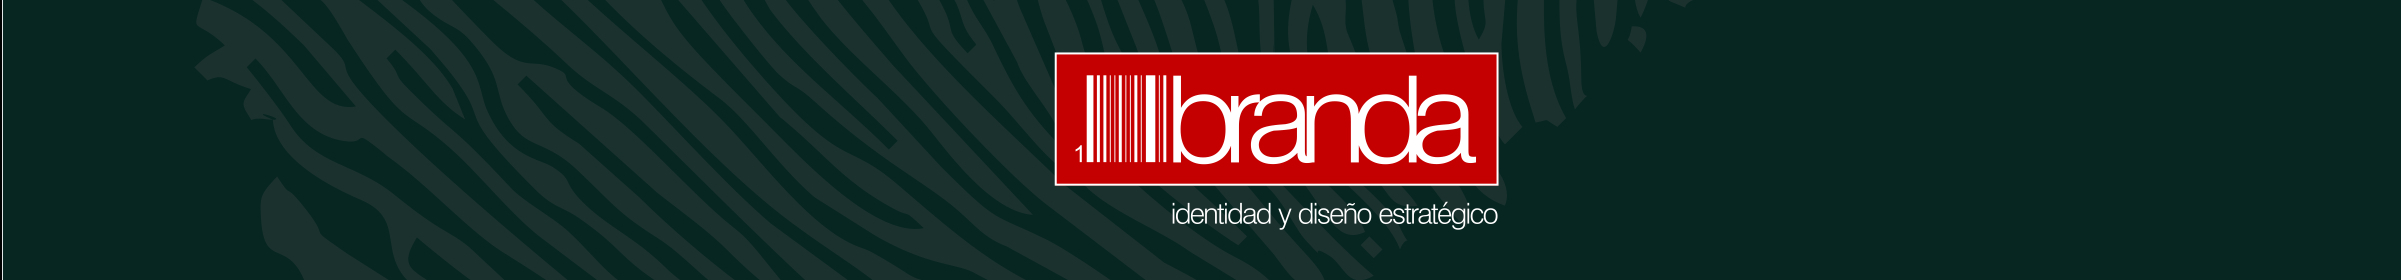 Branda IDE's profile banner